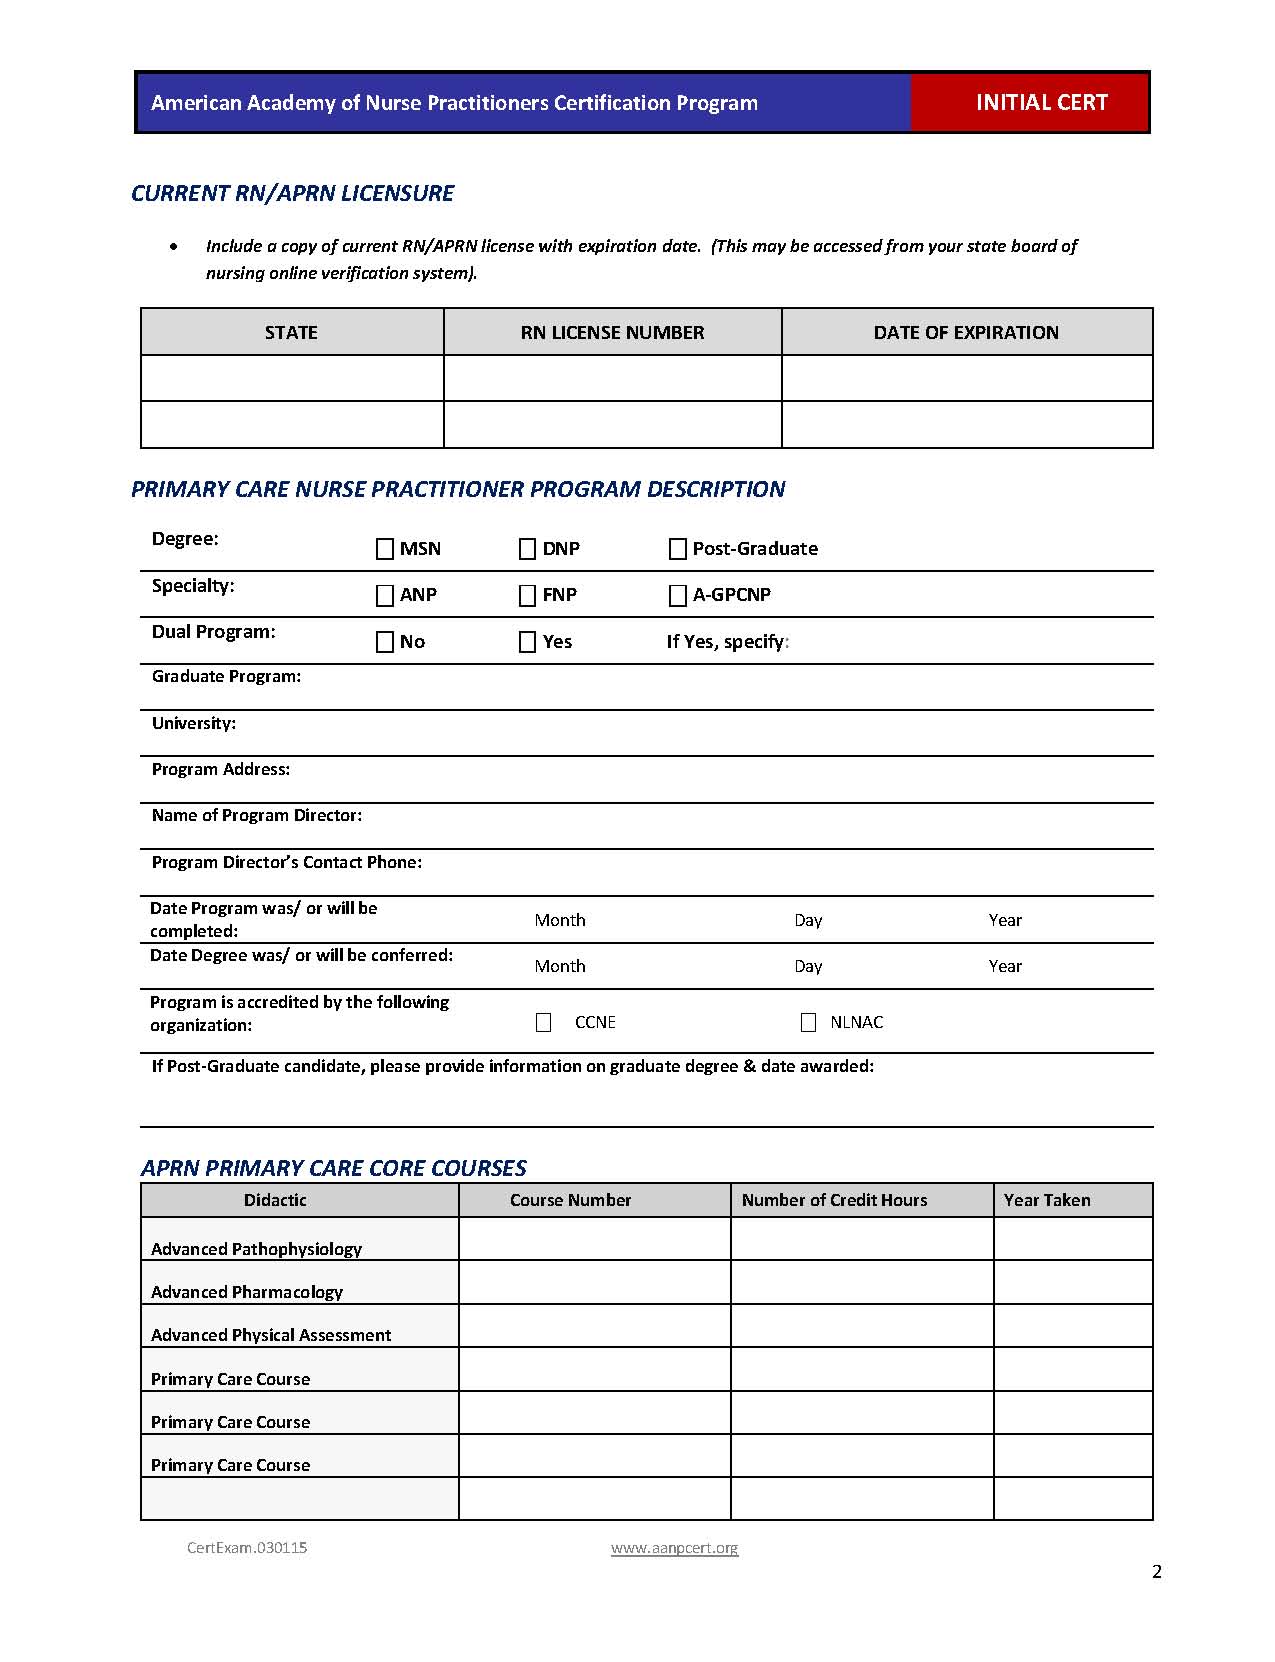 AANP Certification Exam App_Page_2.jpg